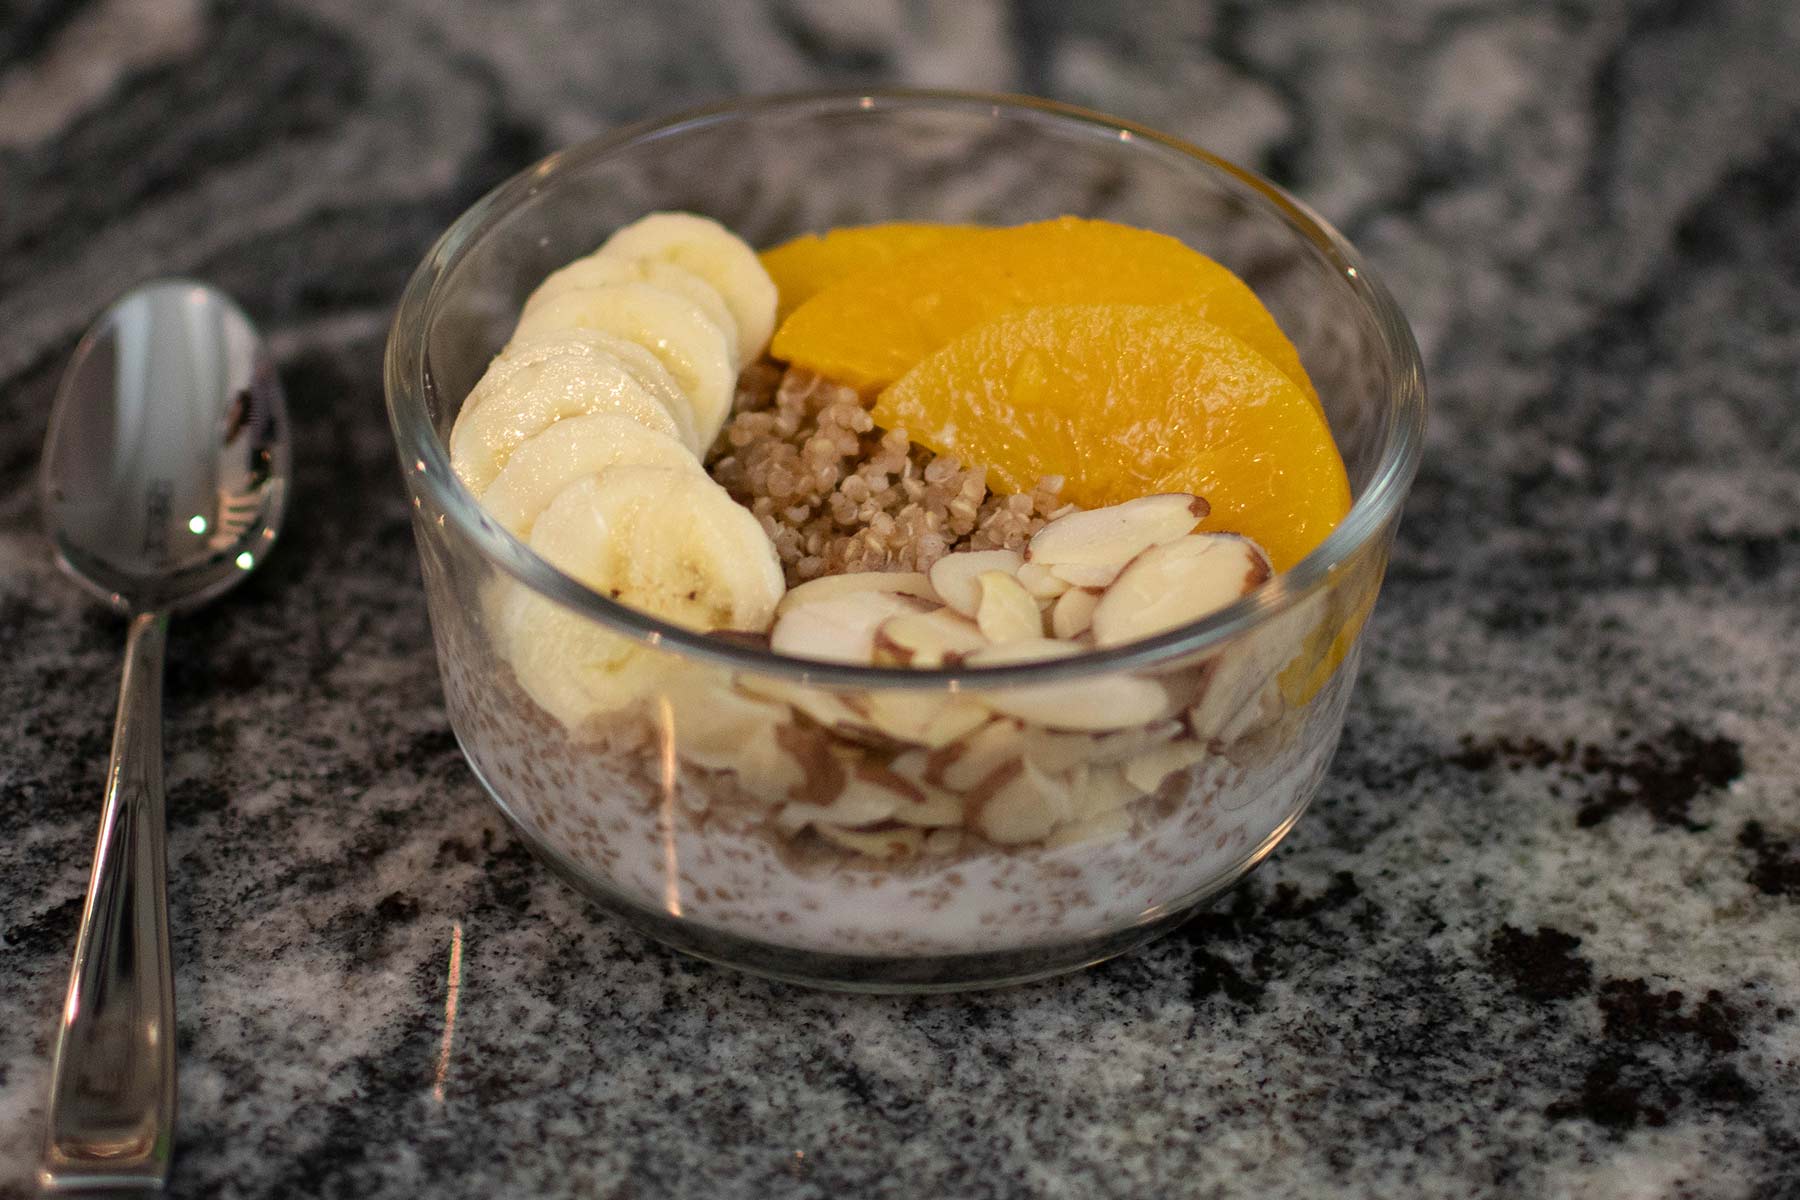 Quinoa breakfast bowl with bananas, almonds, oranges and granola